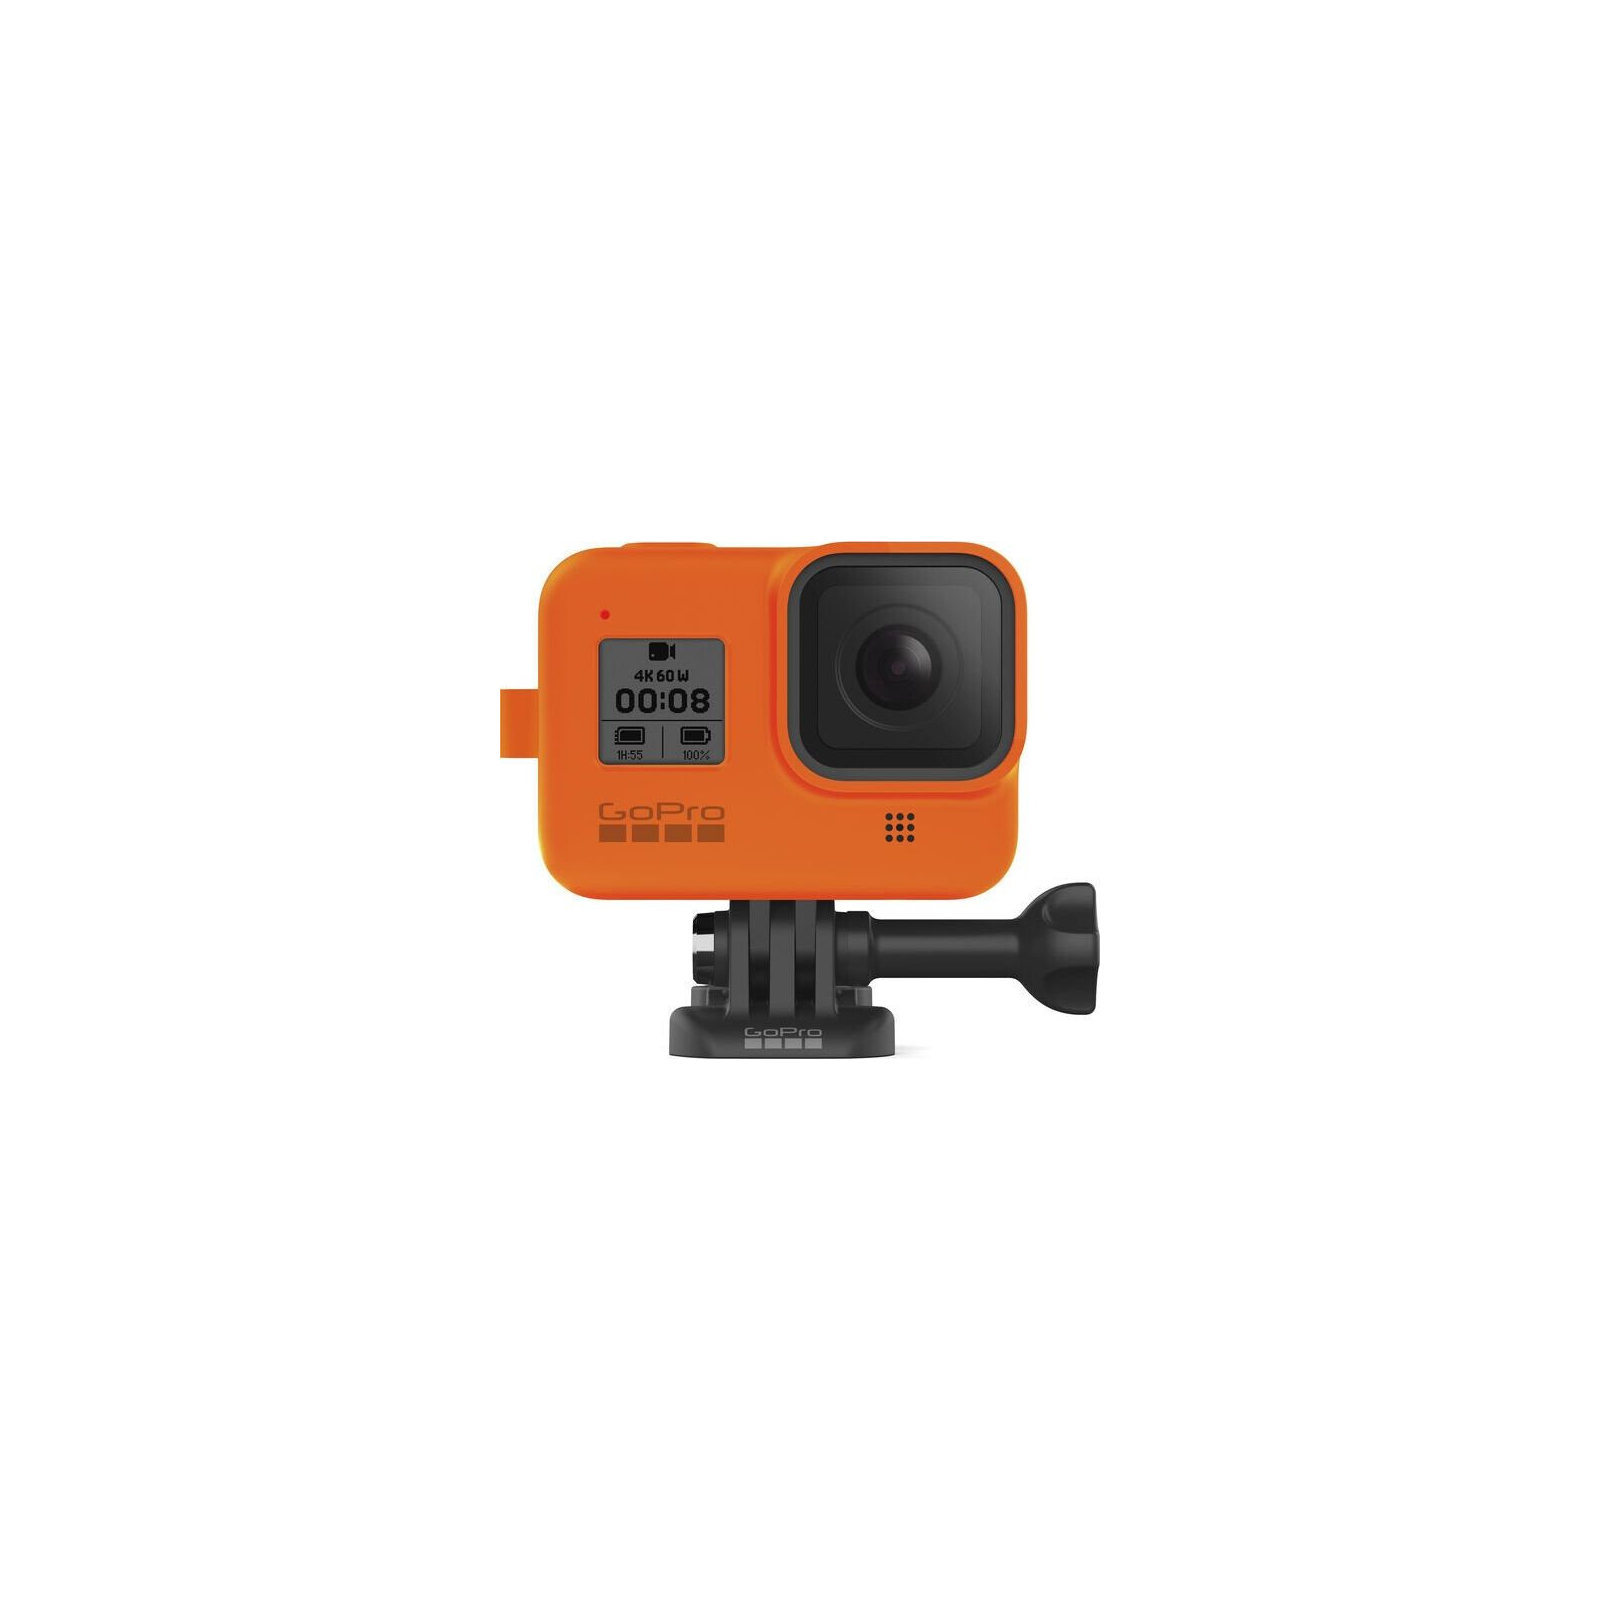 Аксессуар к экшн-камерам GoPro Sleeve&Lanyard Orange для HERO8 (AJSST-004) изображение 6